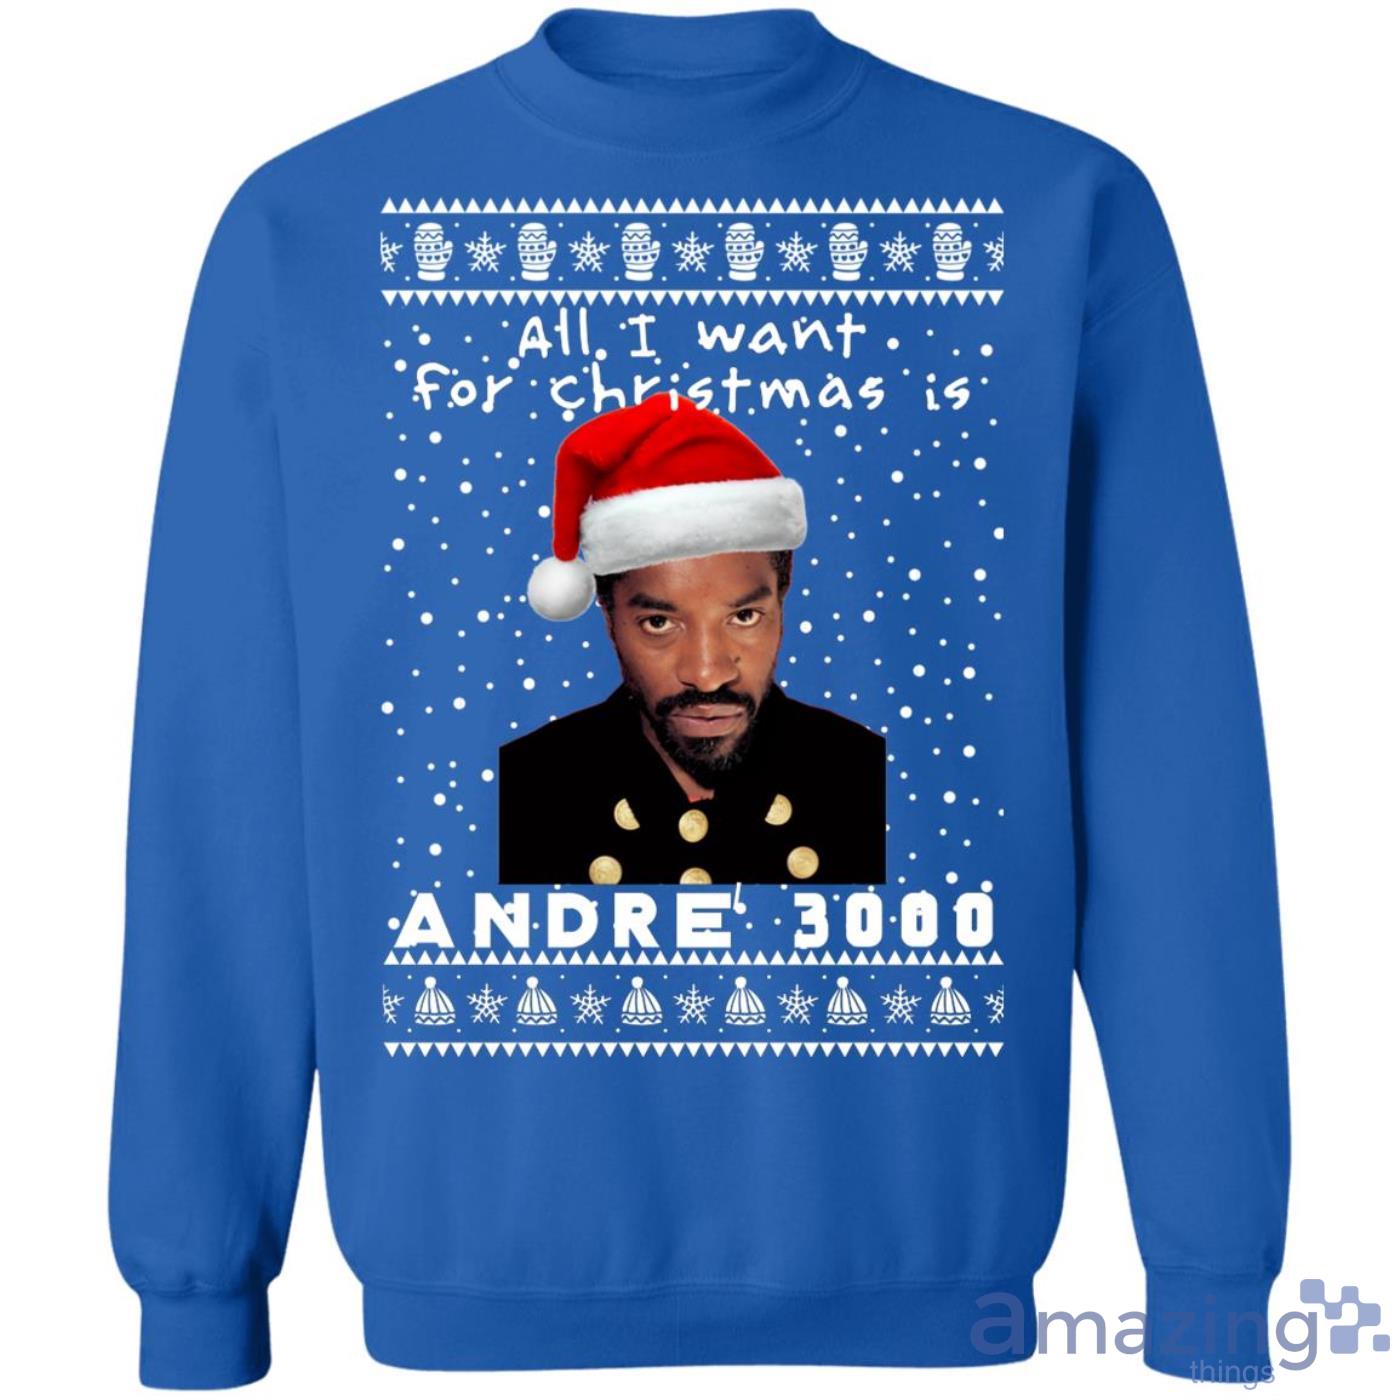 André 3000 Rapper Christmas Sweatshirt Product Photo 1